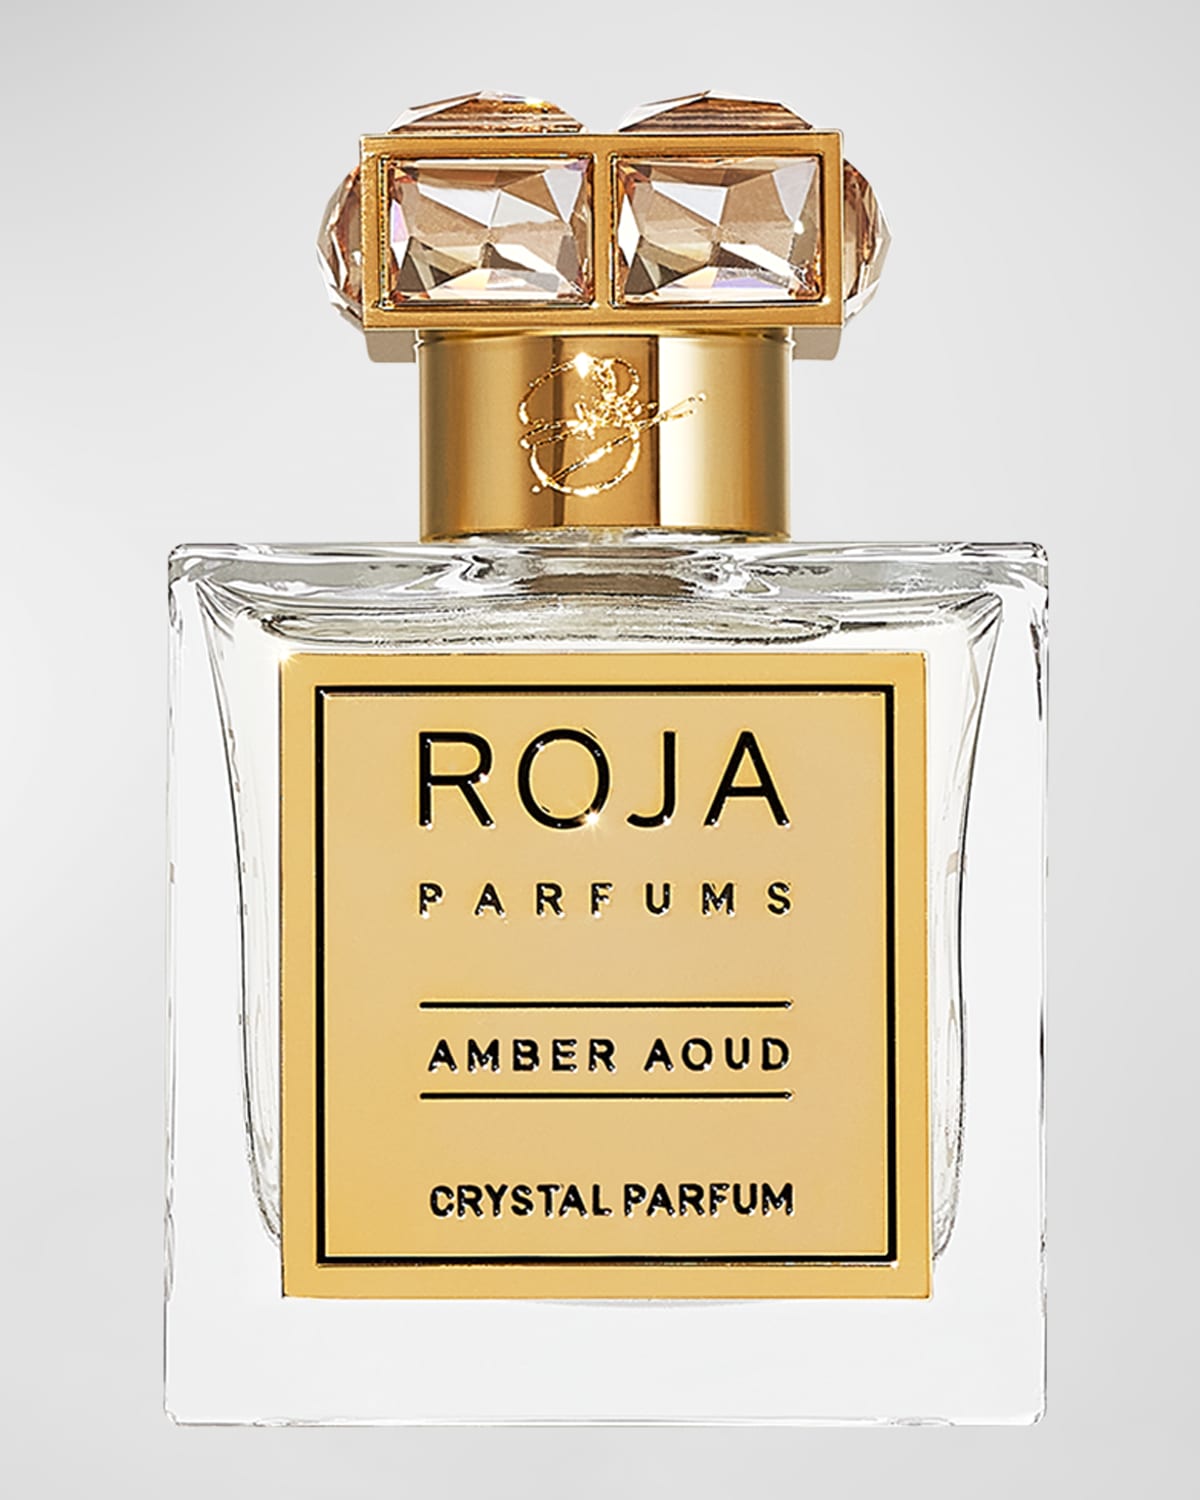 Amber Aoud Crystal Parfum, 3.4 oz.